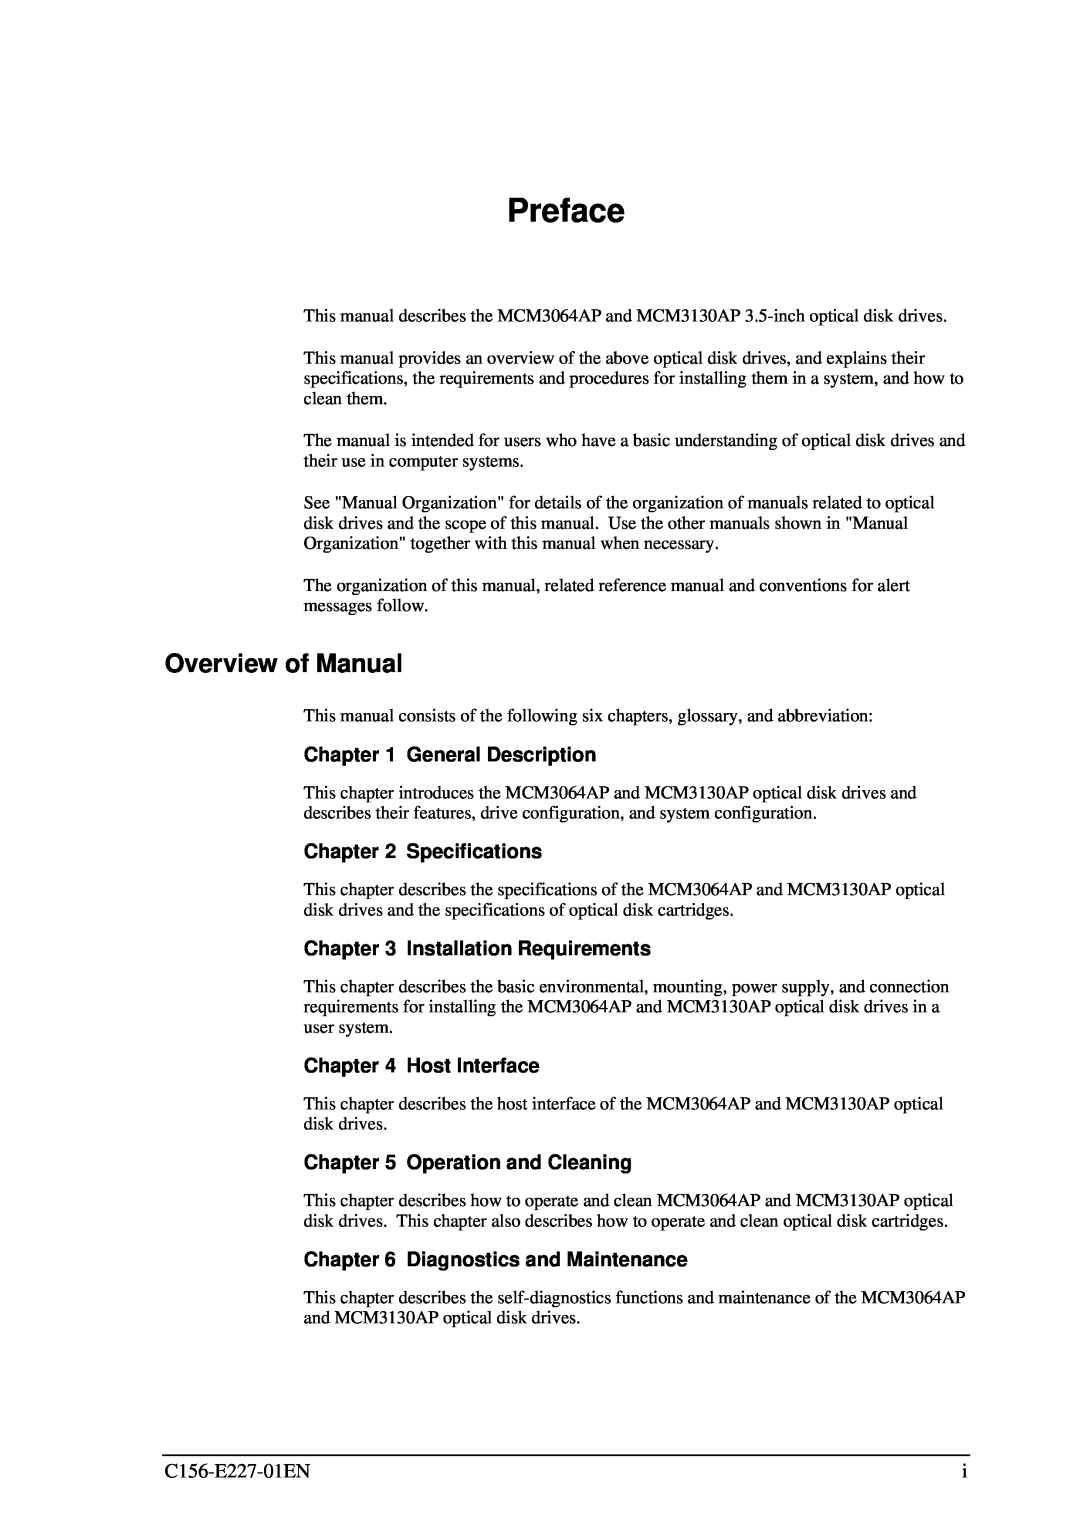 Fujitsu MCM3130AP, MCM3064AP Preface, Overview of Manual, General Description, Specifications, Installation Requirements 